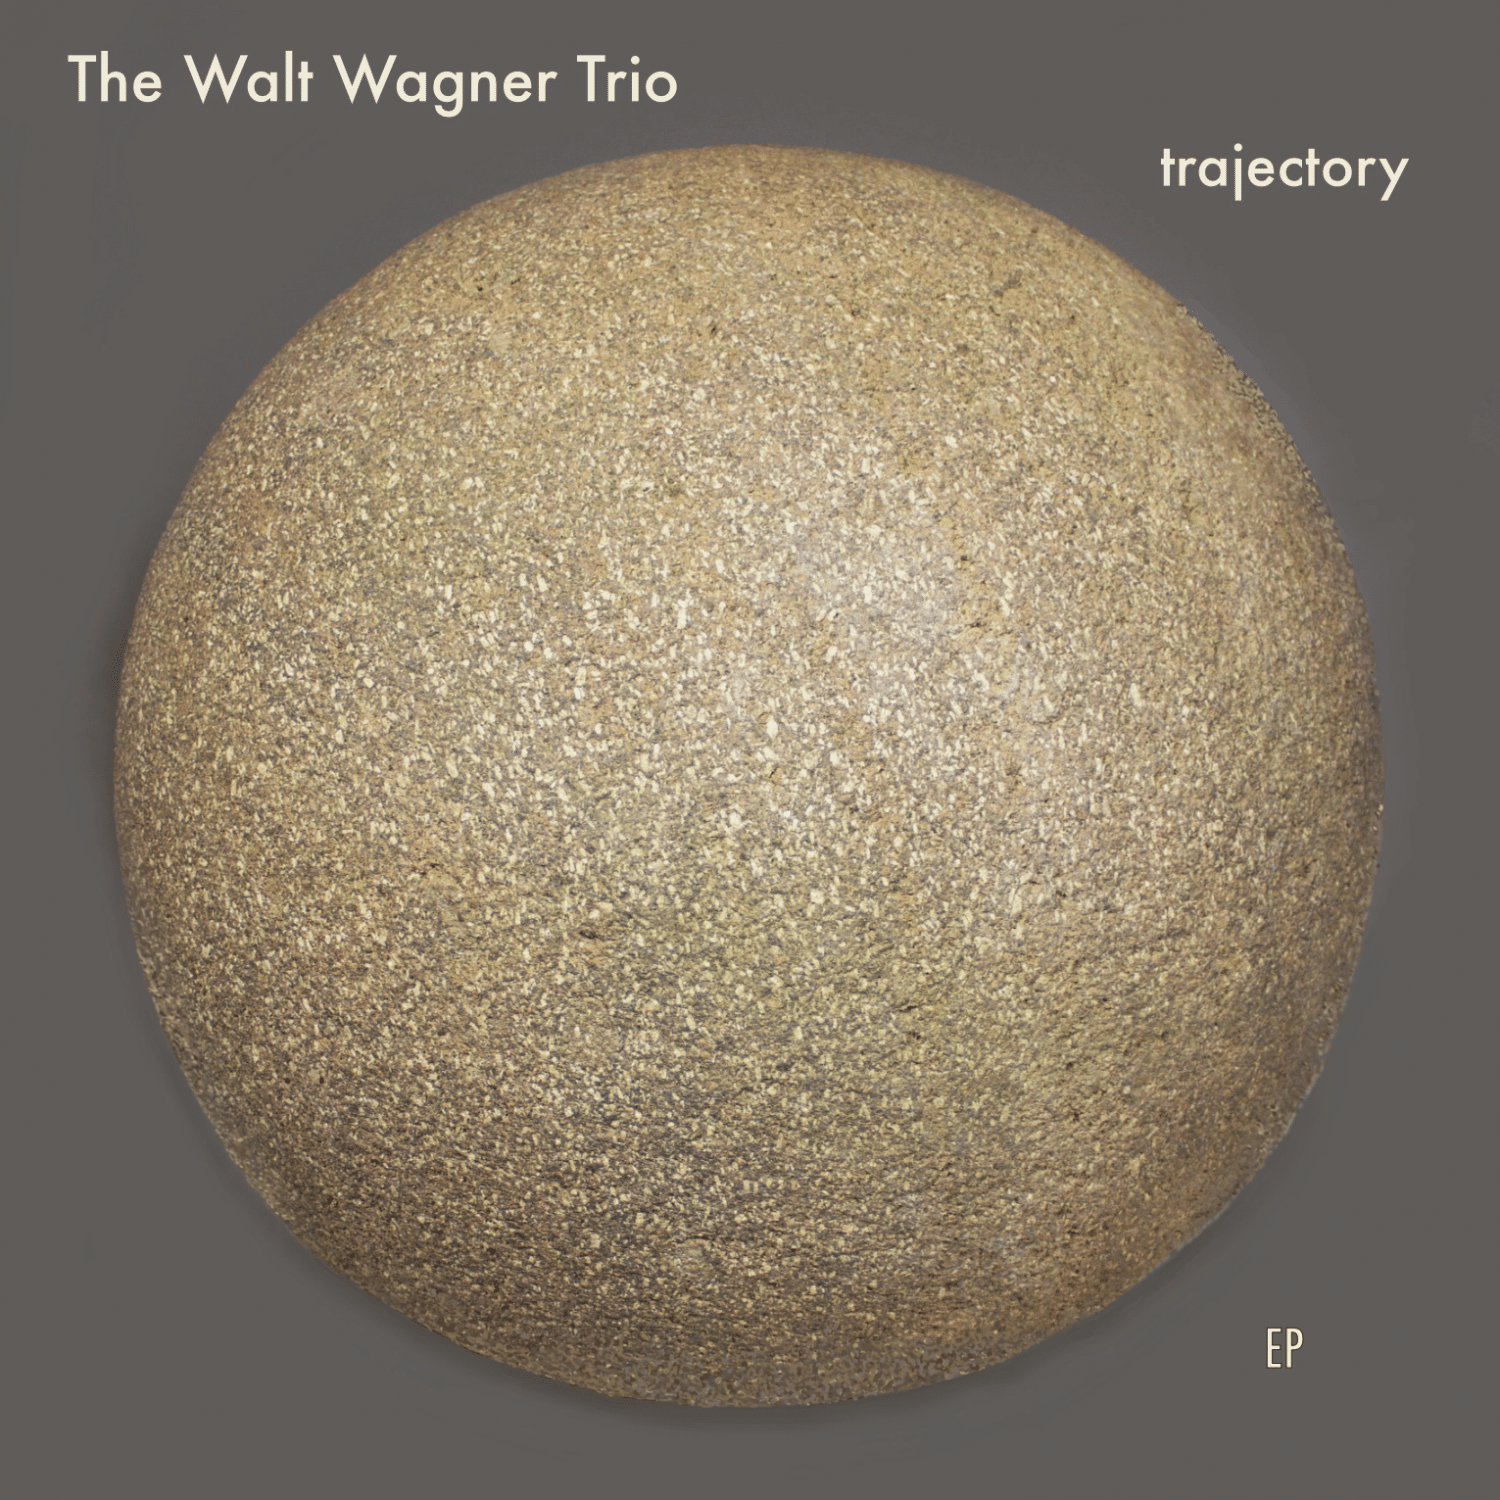 The Walt Wagner Trio - Trajectory